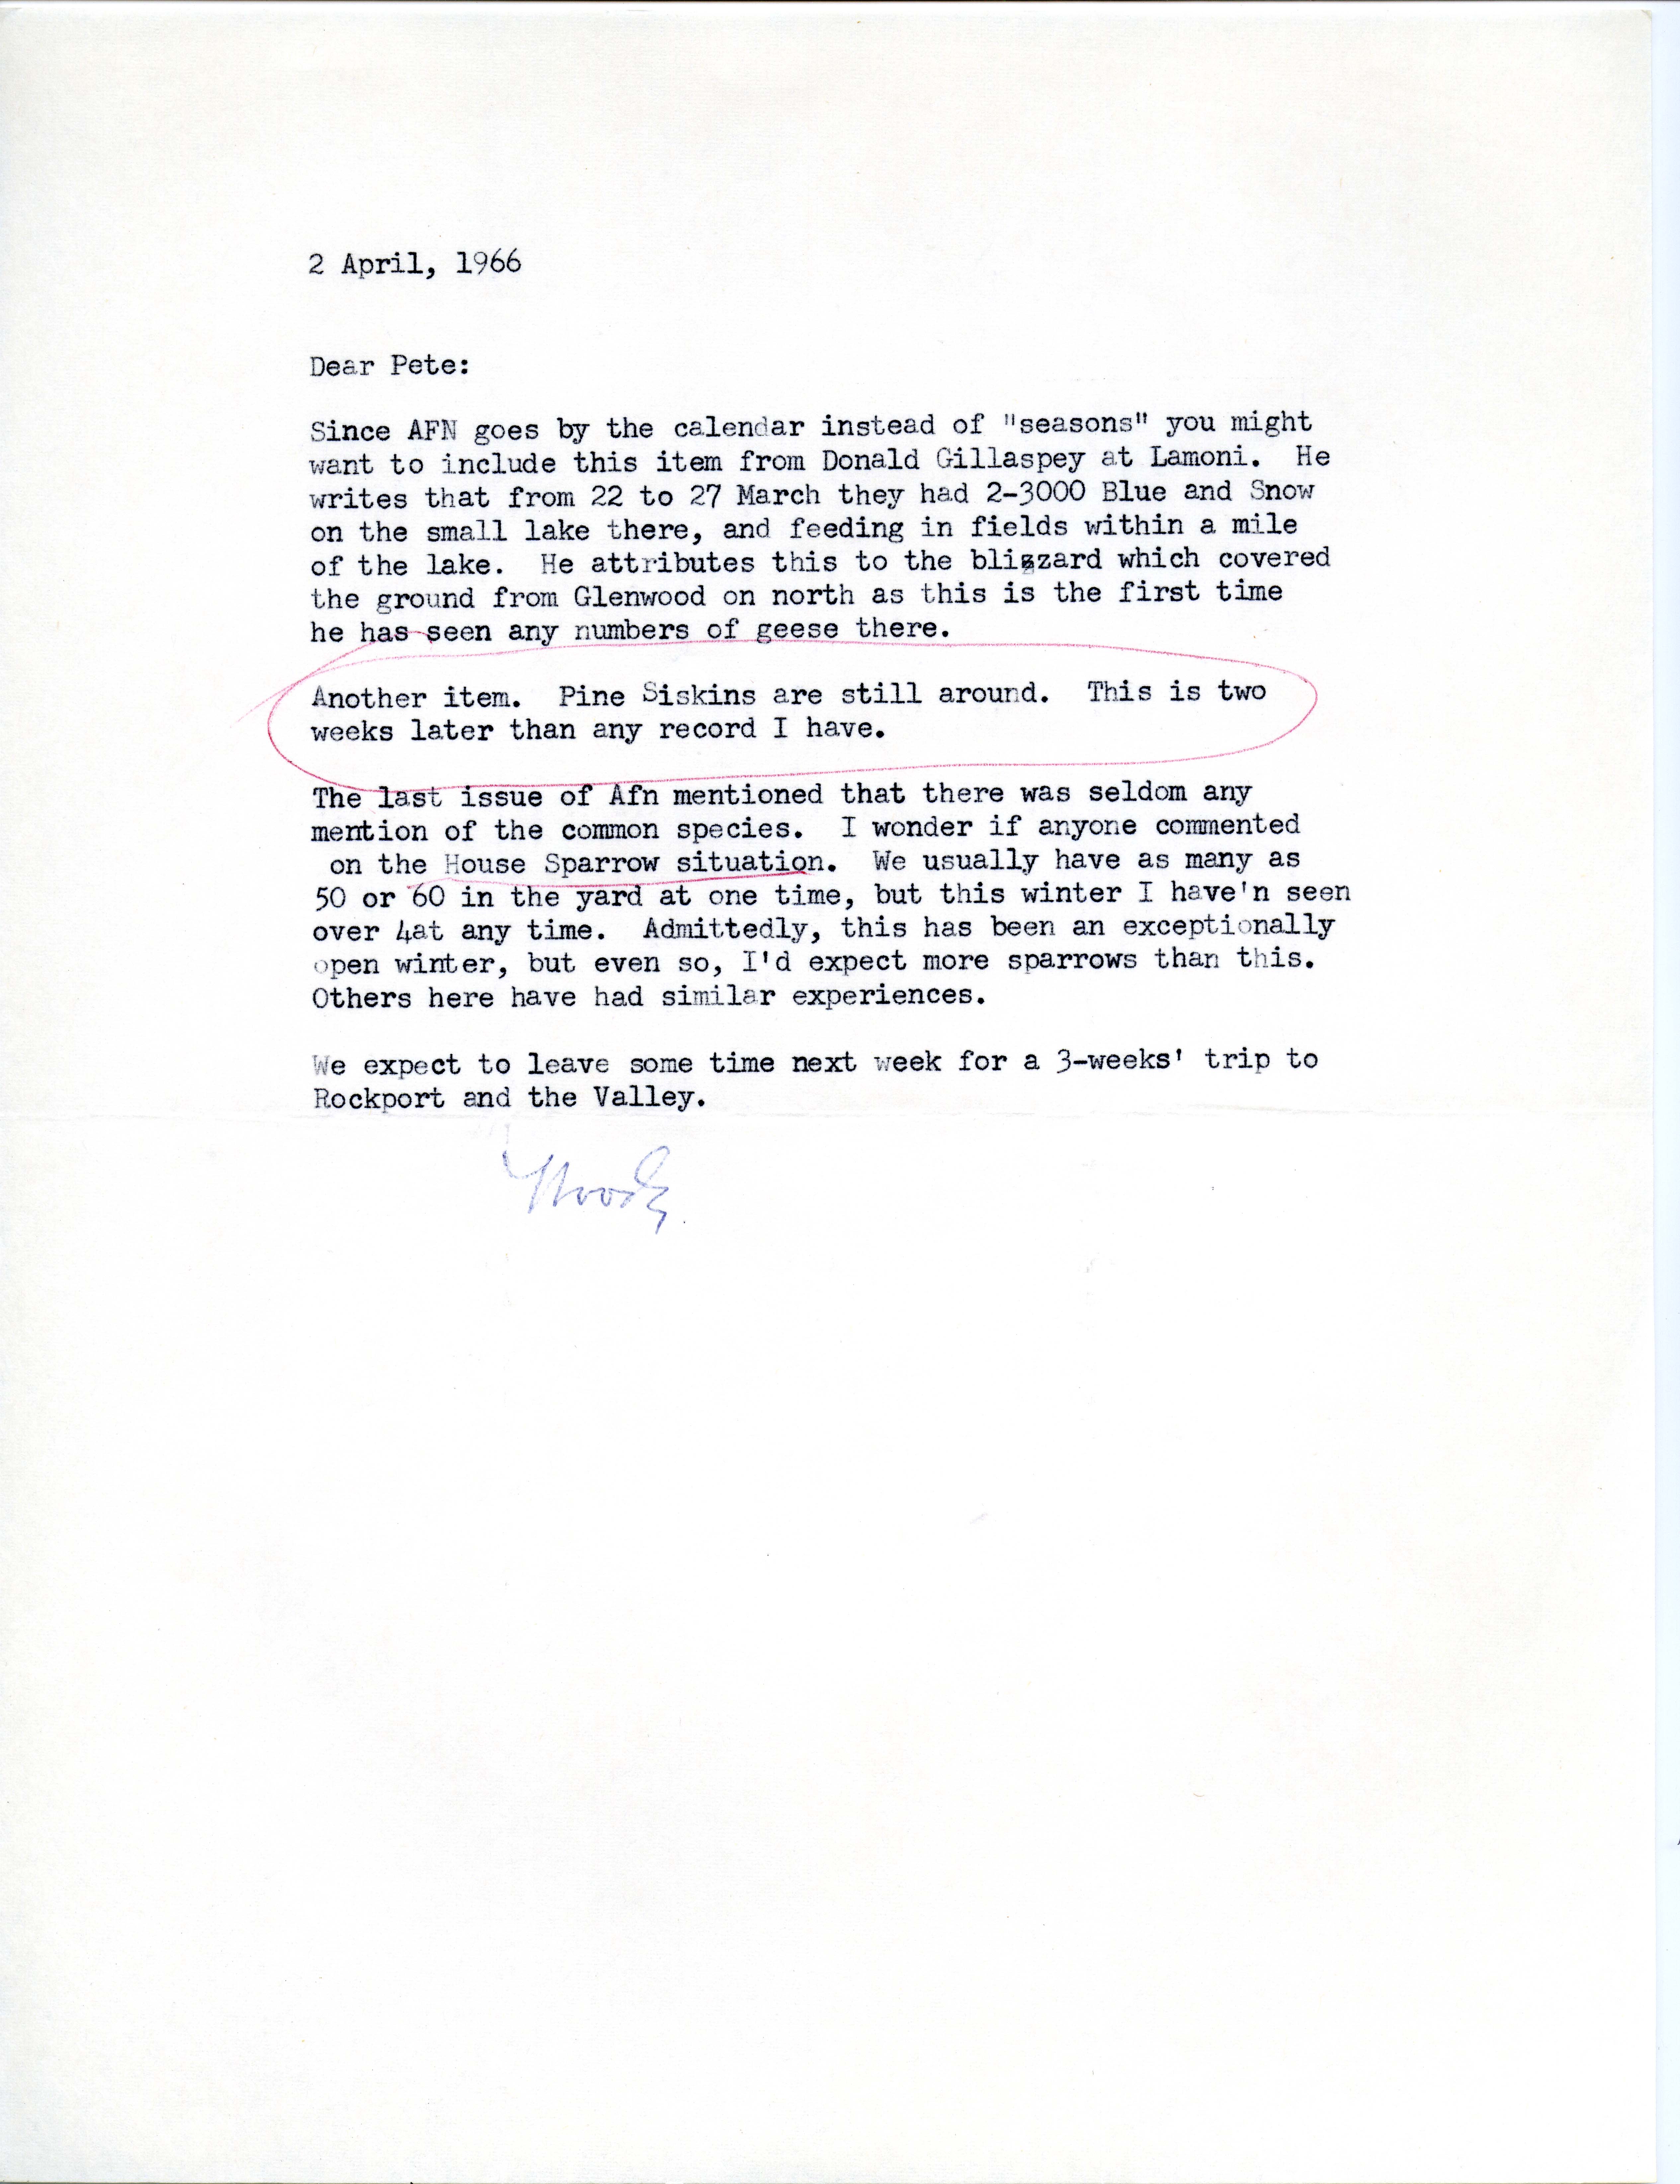 Woodward H. Brown letter to Peter C. Petersen regarding winter migration, April 2, 1966